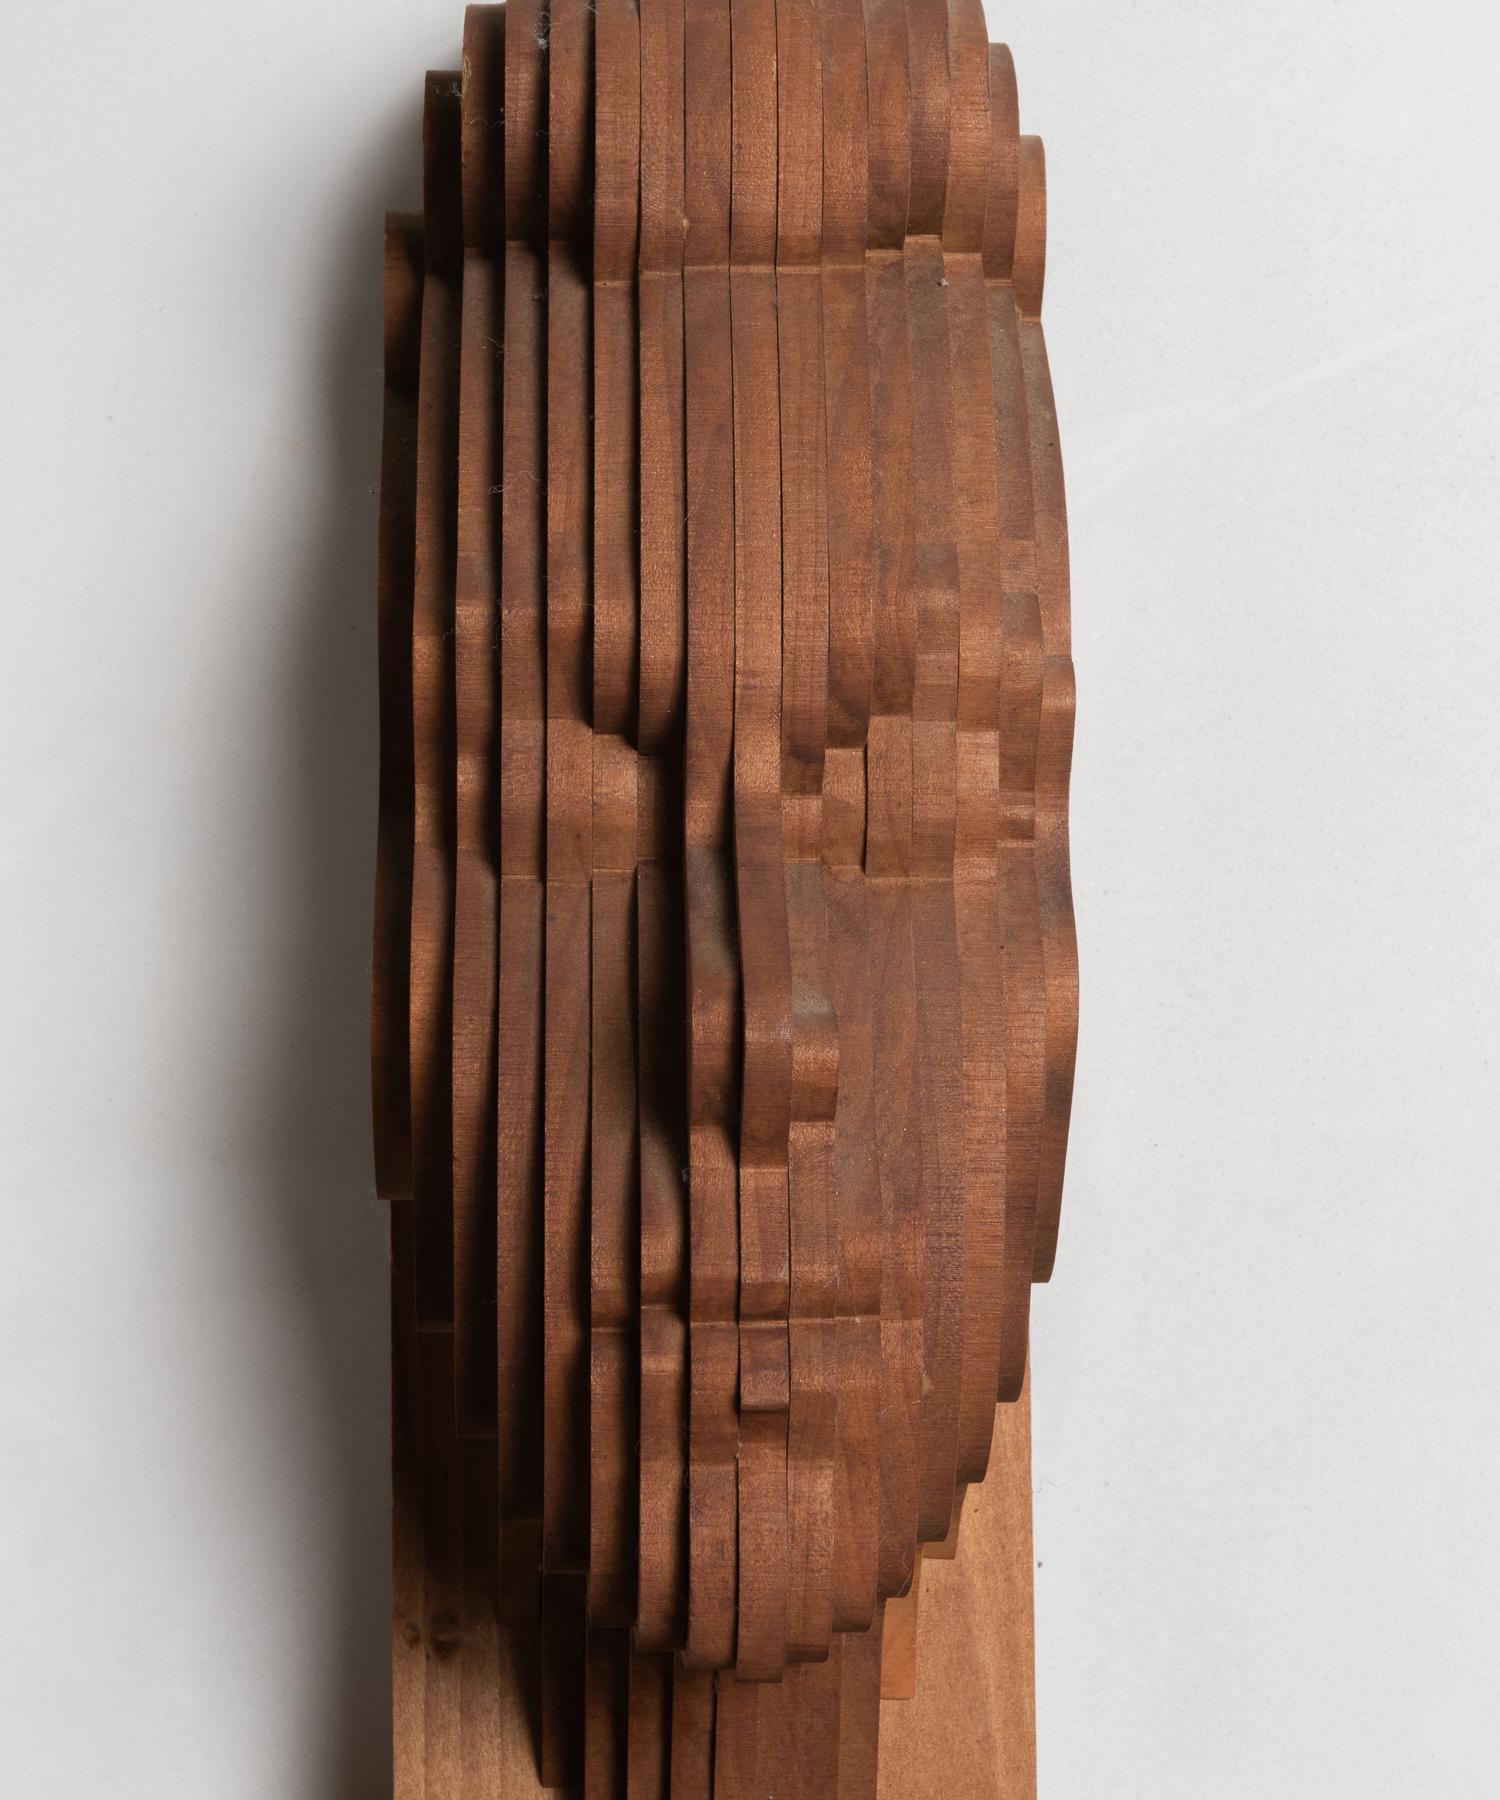 Wood TOTEM Sculptures by Reuben Karol, America, 20th Century